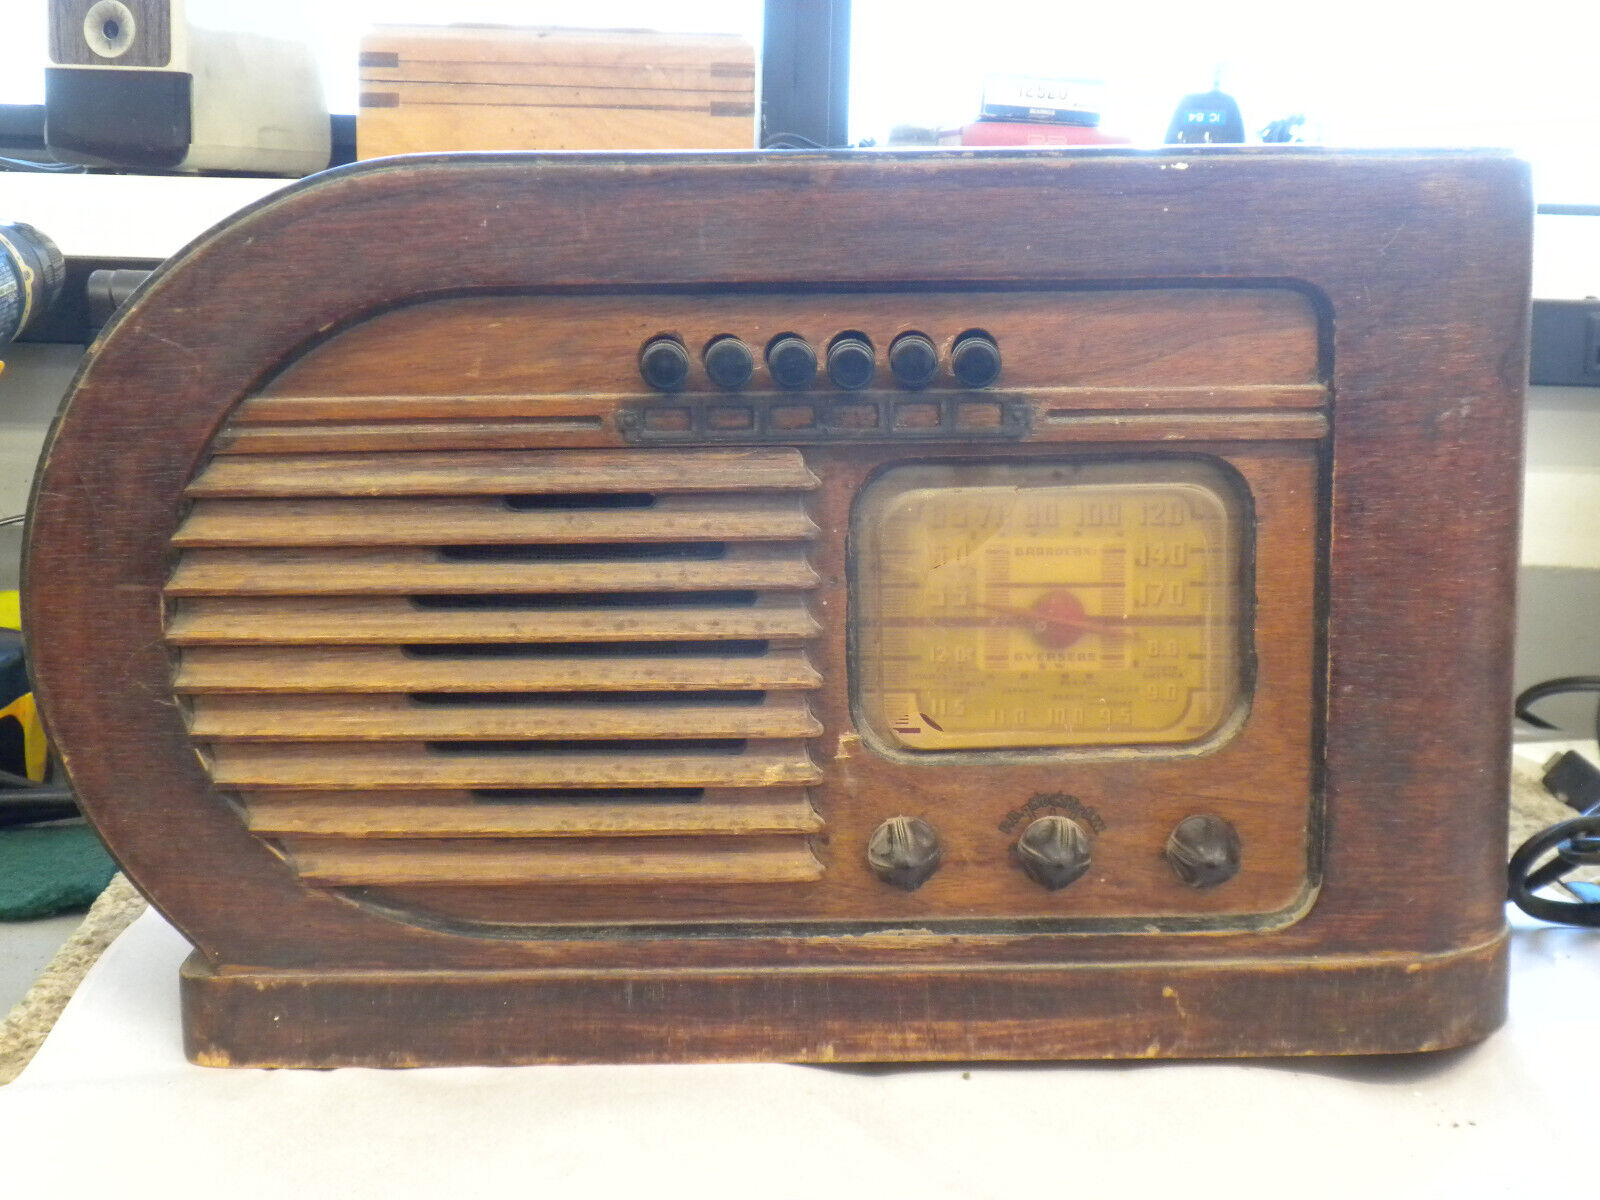 Philco Radio Model 41-231